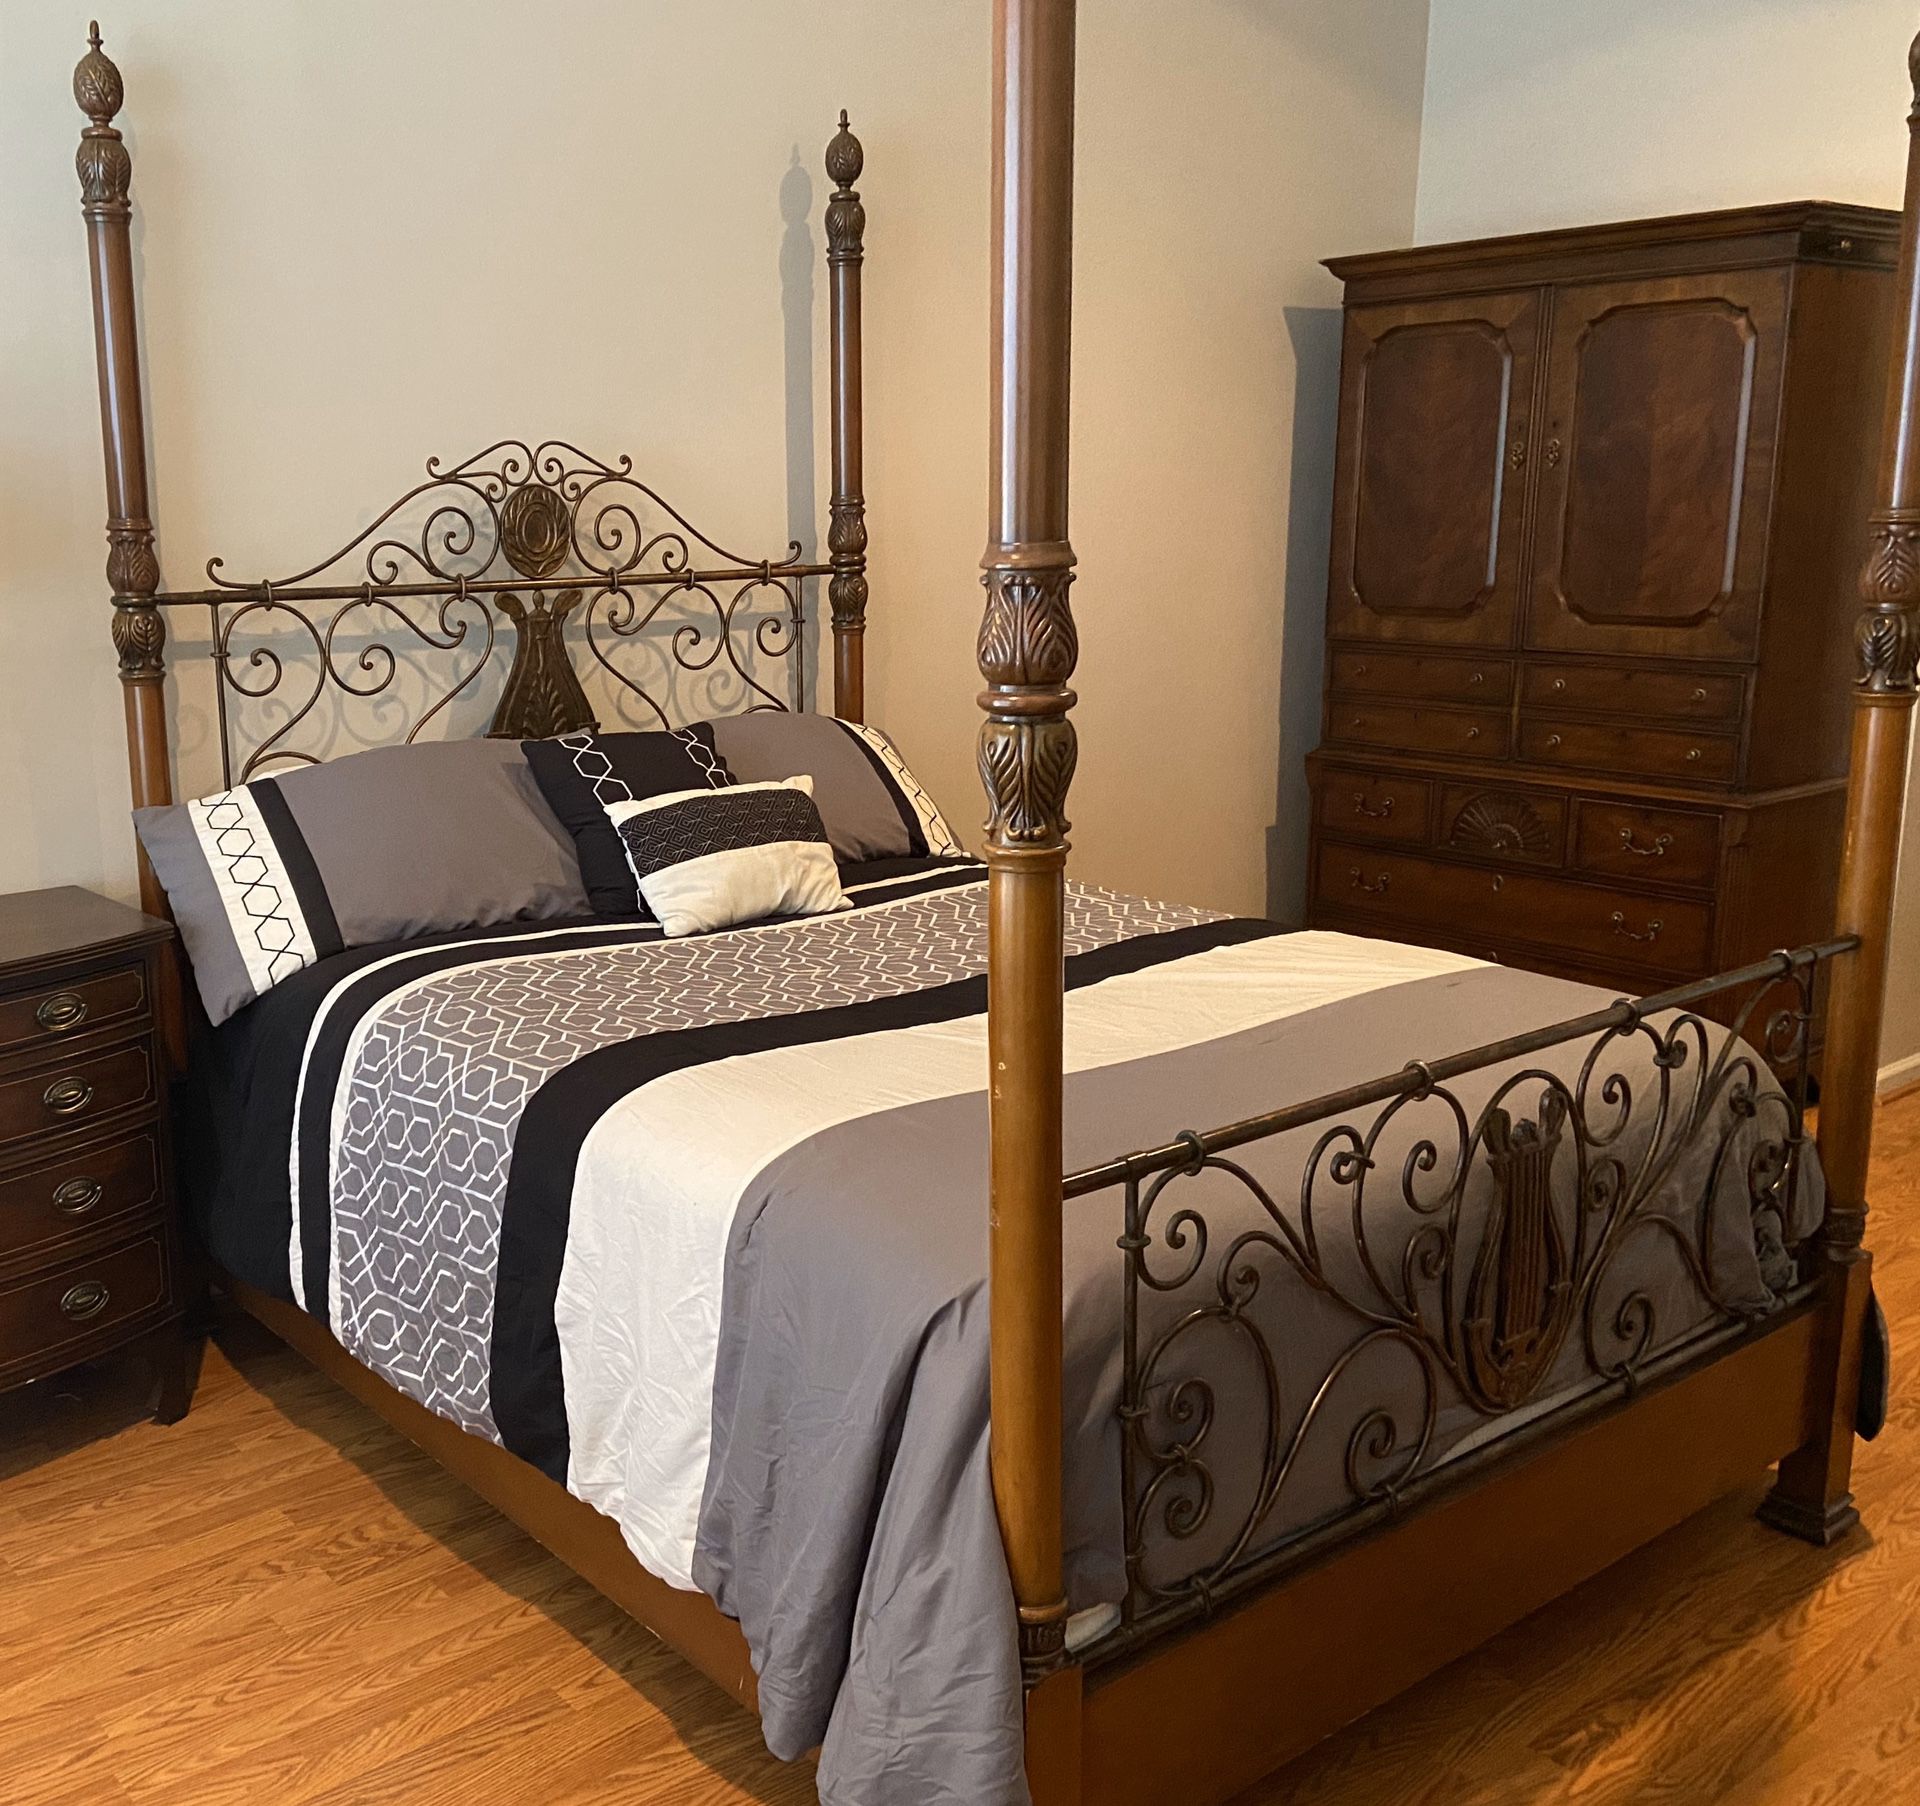 Bed frame for queen mattress (mattress not included)